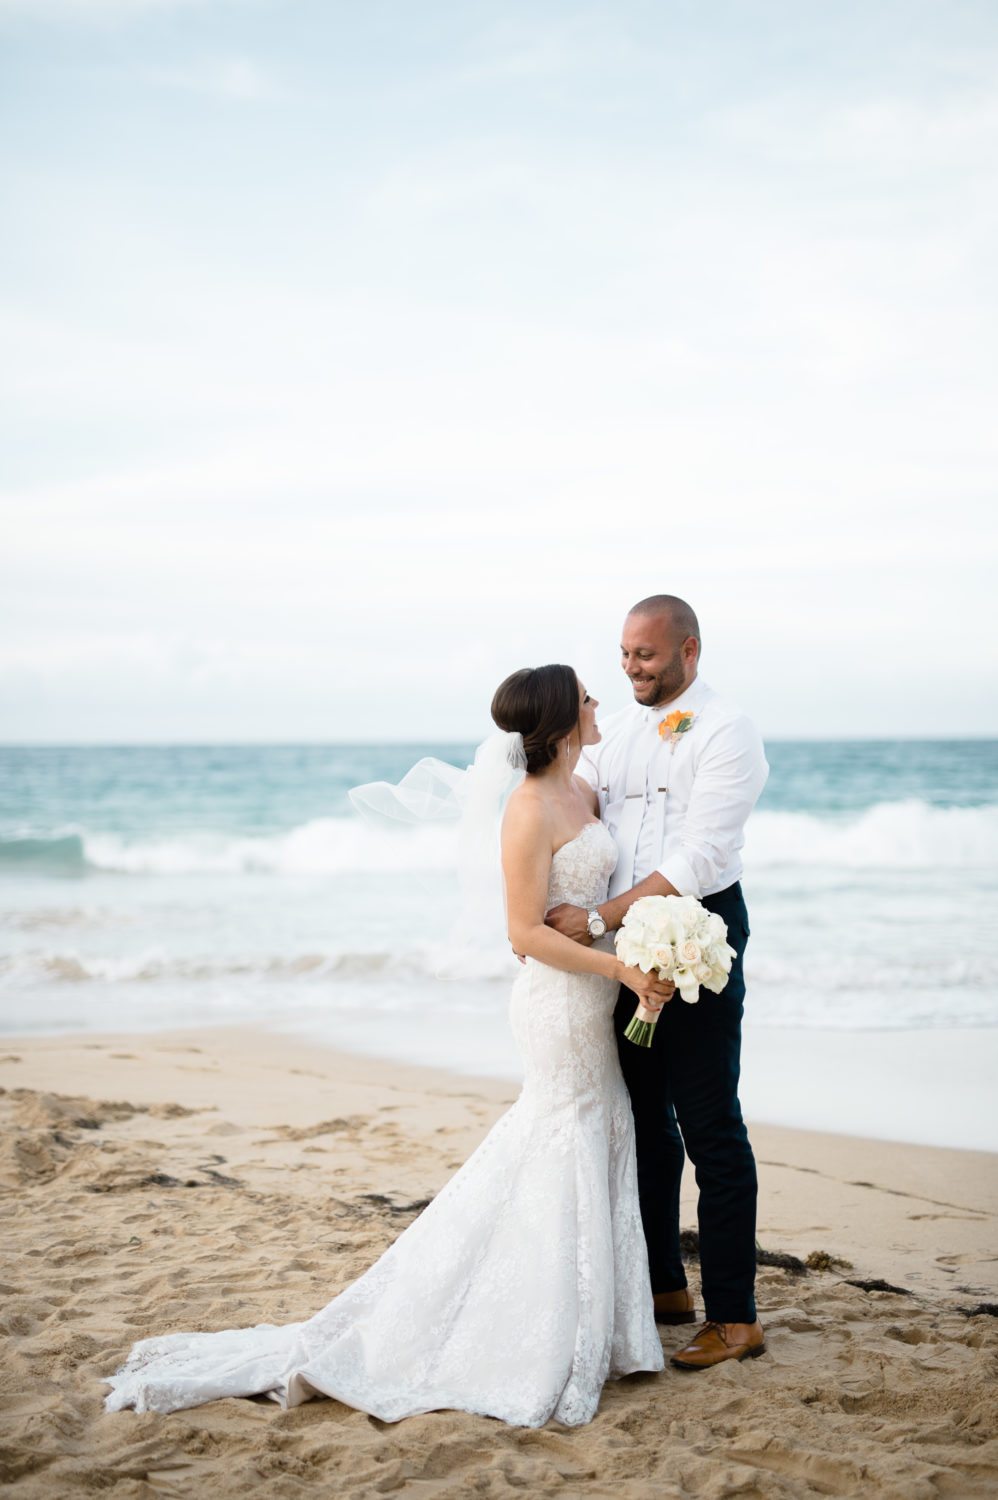 Destination beach wedding photography at La Concha Puerto Rico by Camille Fontanez